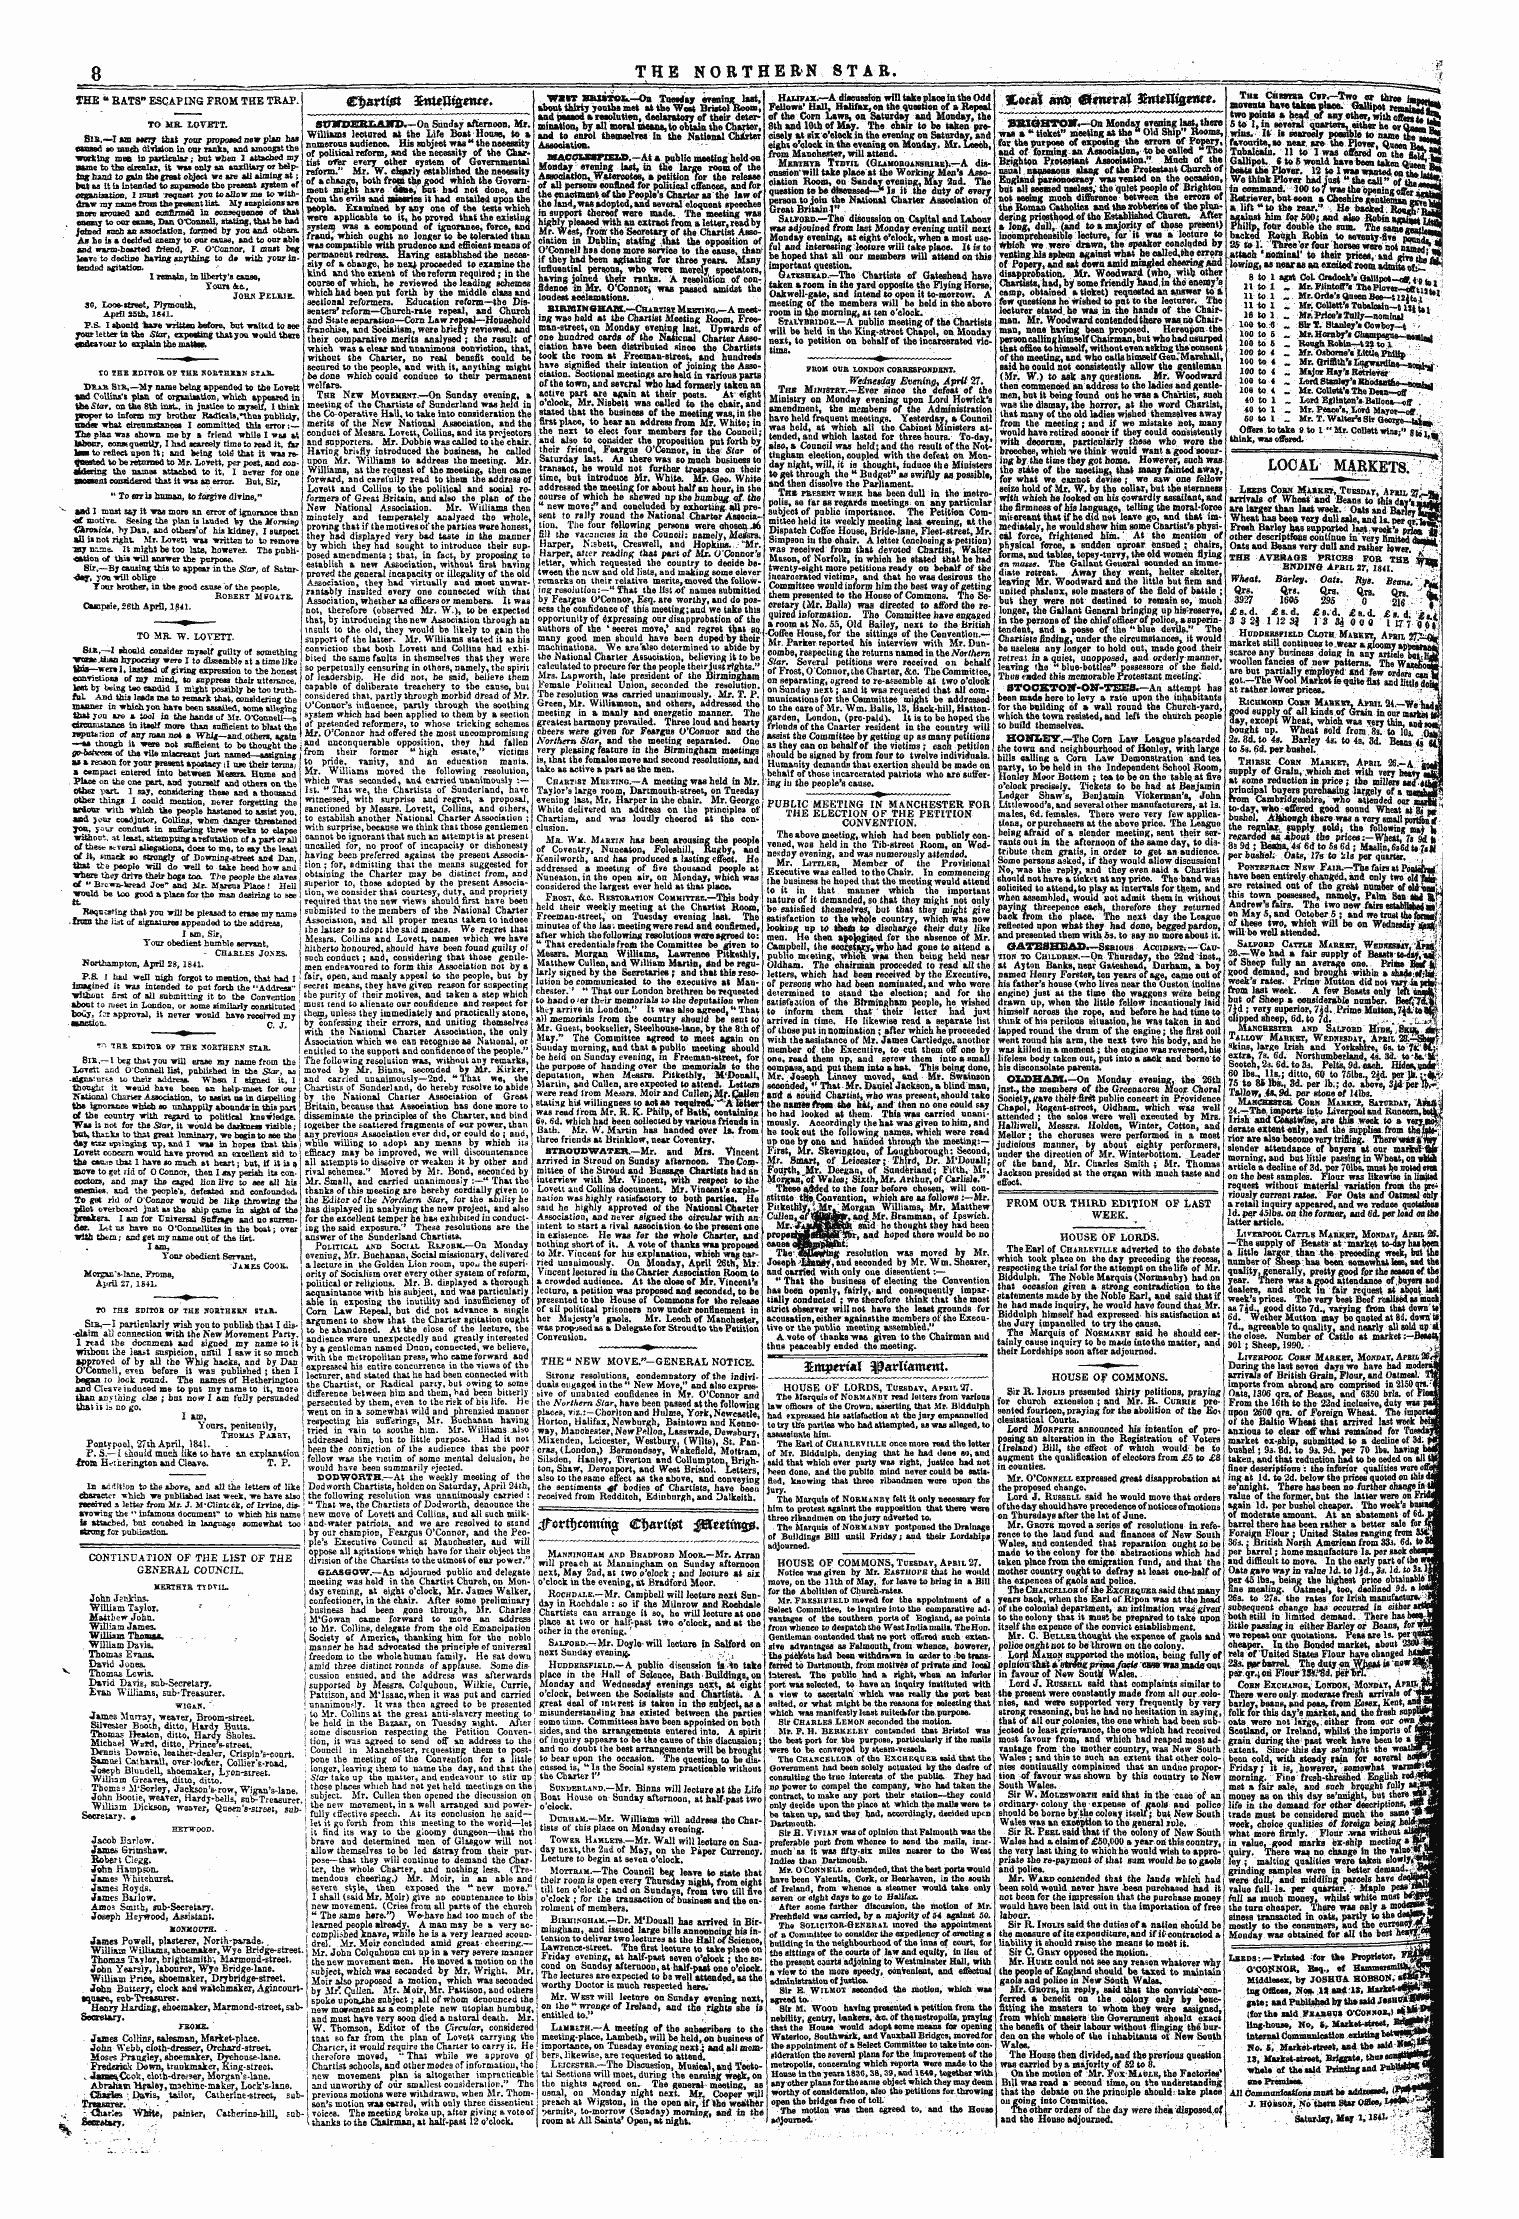 Northern Star (1837-1852): jS F Y, 1st edition - #Ortf)Comm^ C^Artt^T $&Itim&